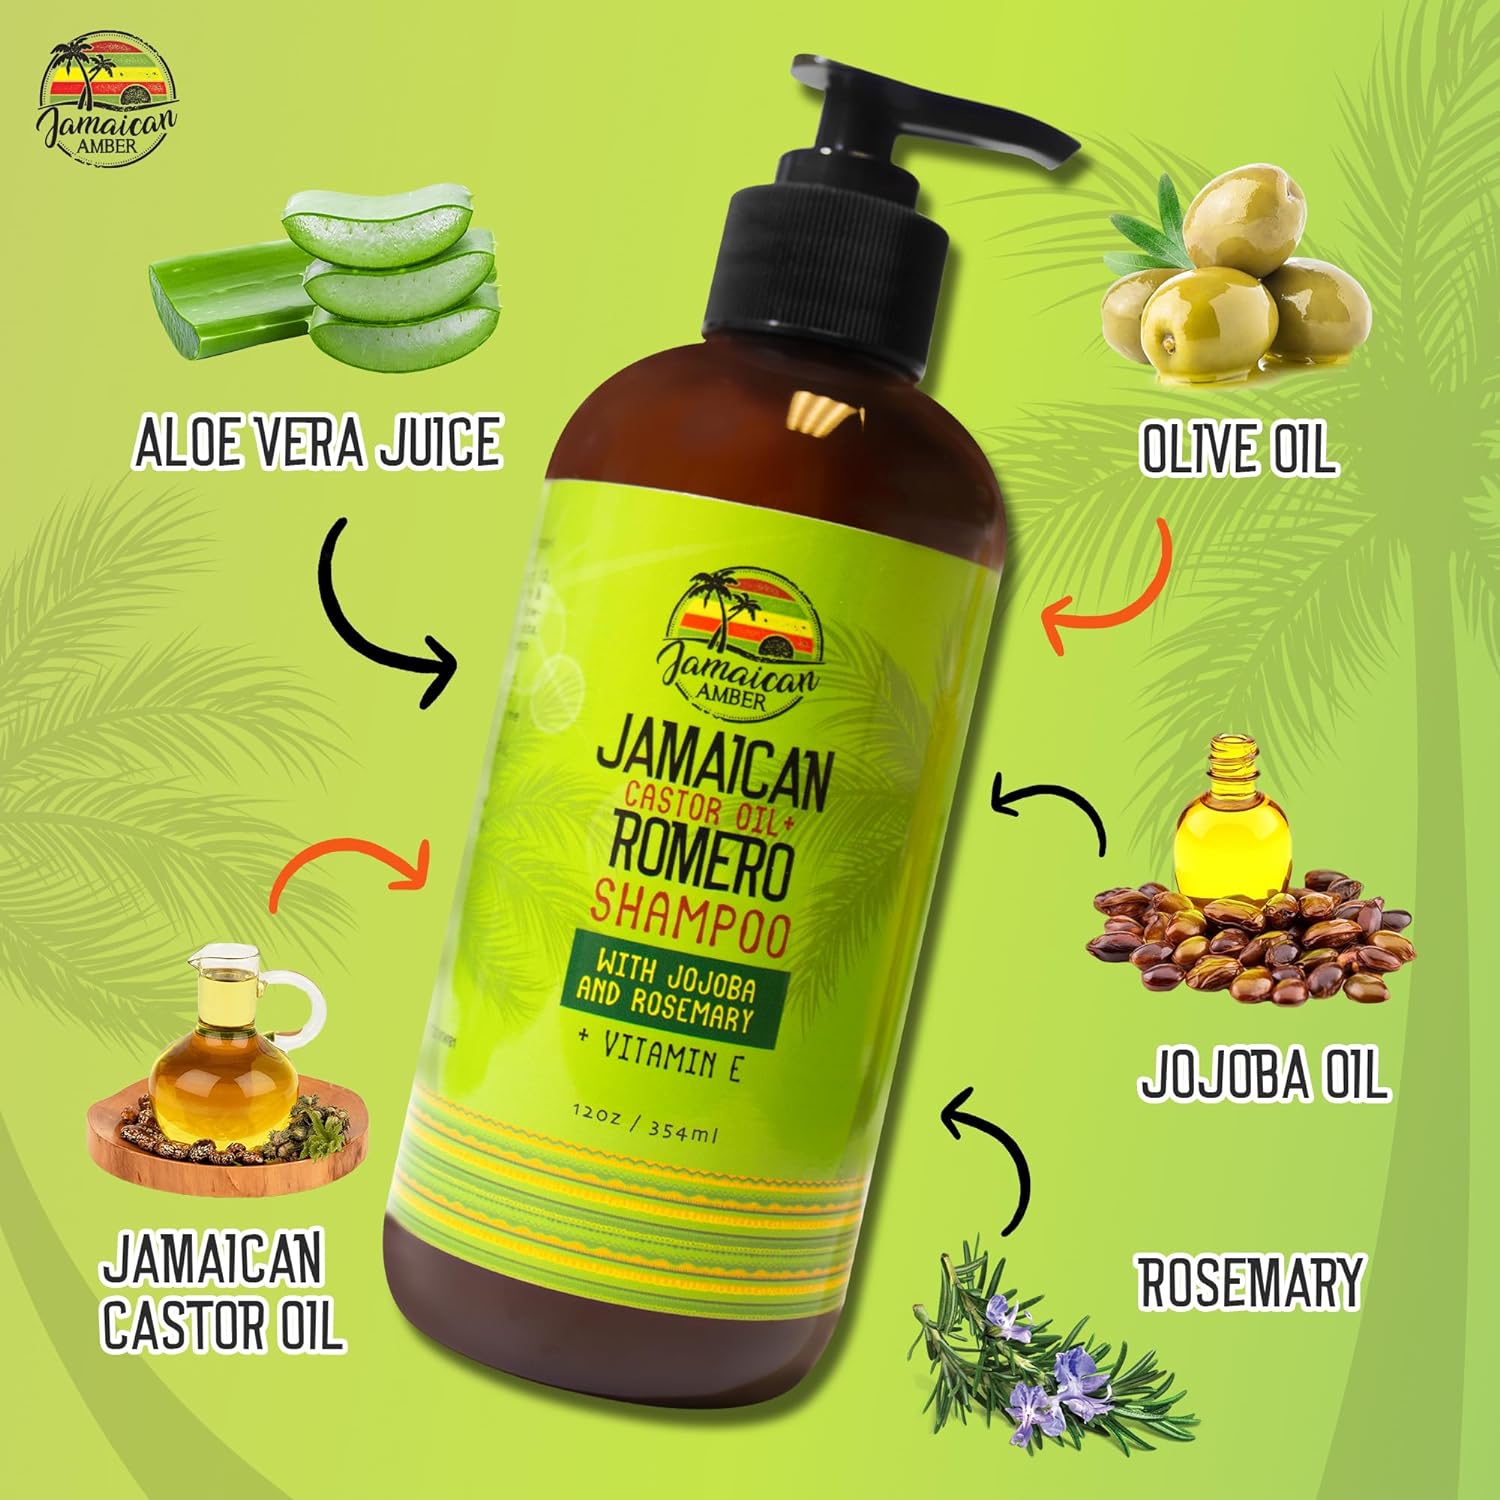 Jamaican Amber Romero Shampoo 12oz